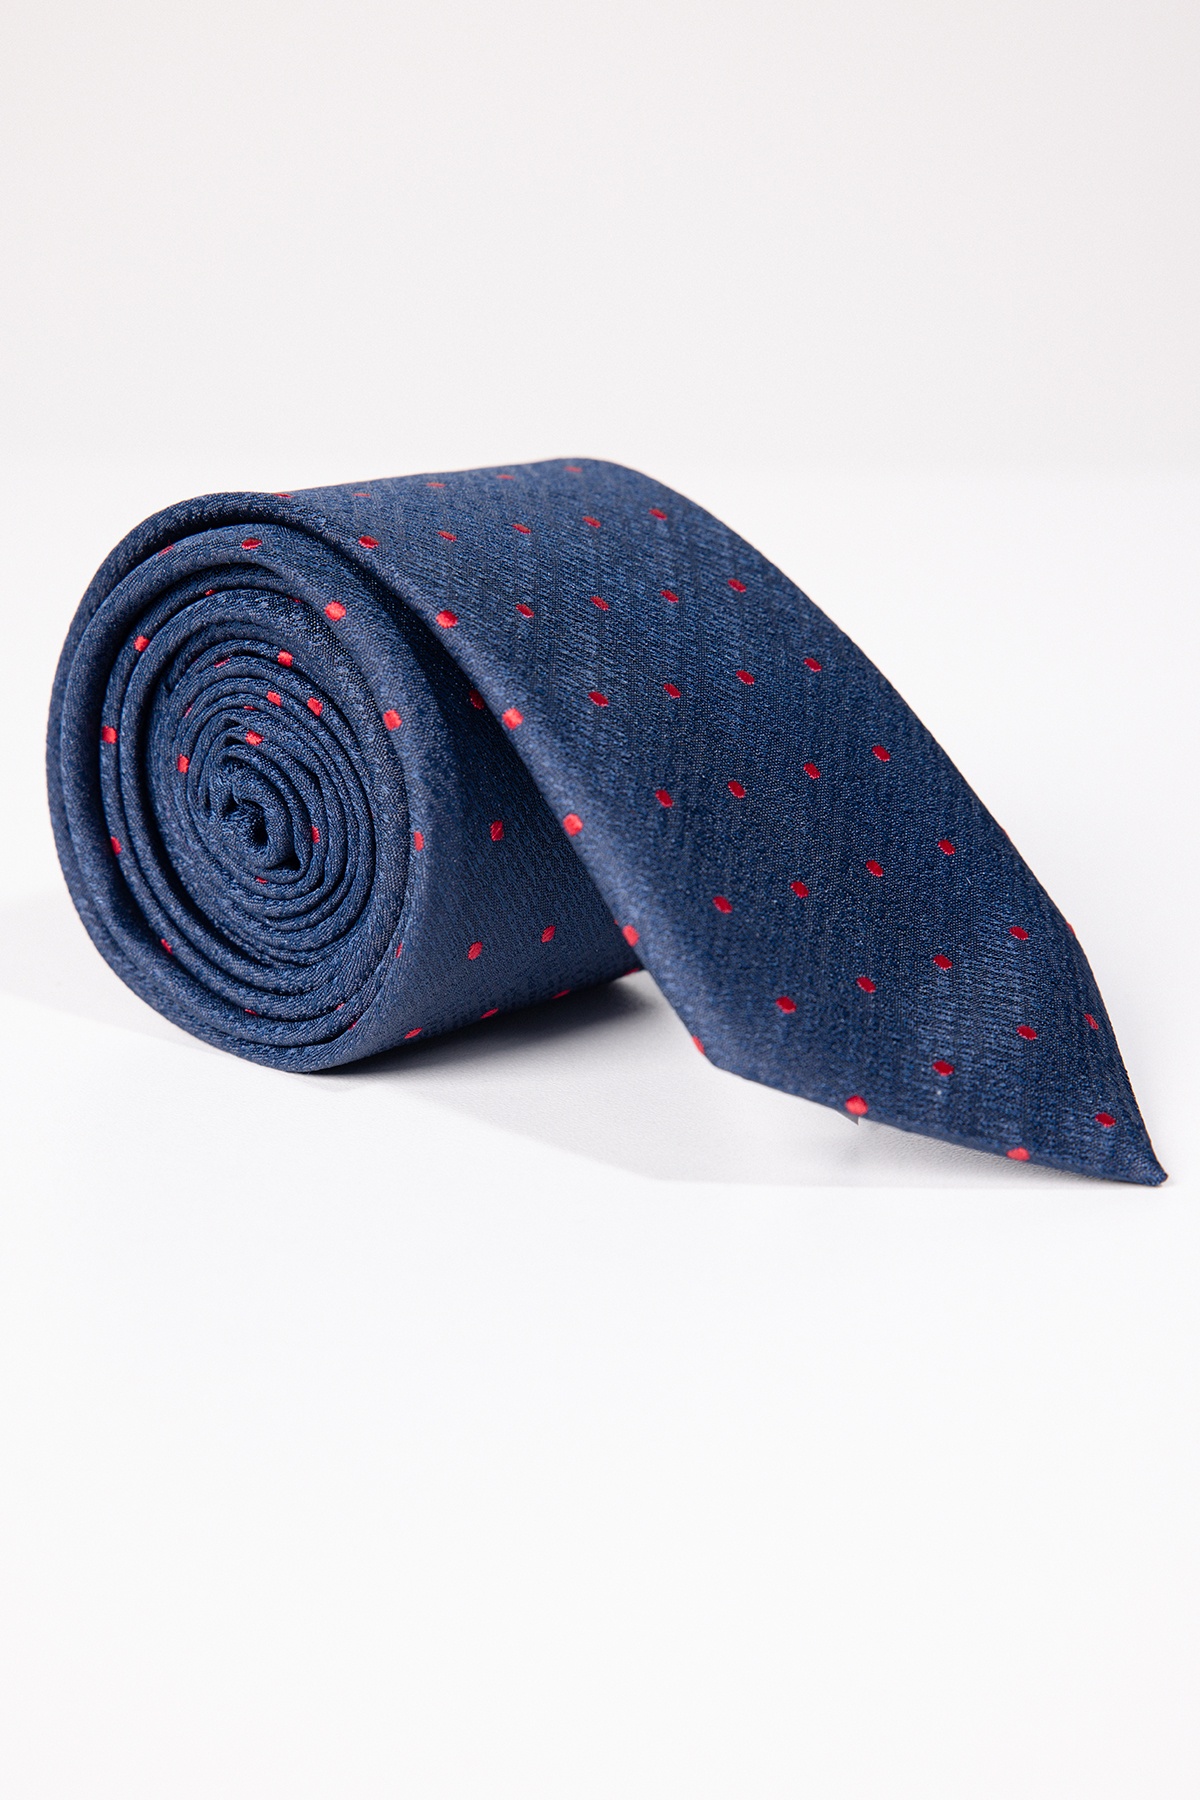  темно синий галстук